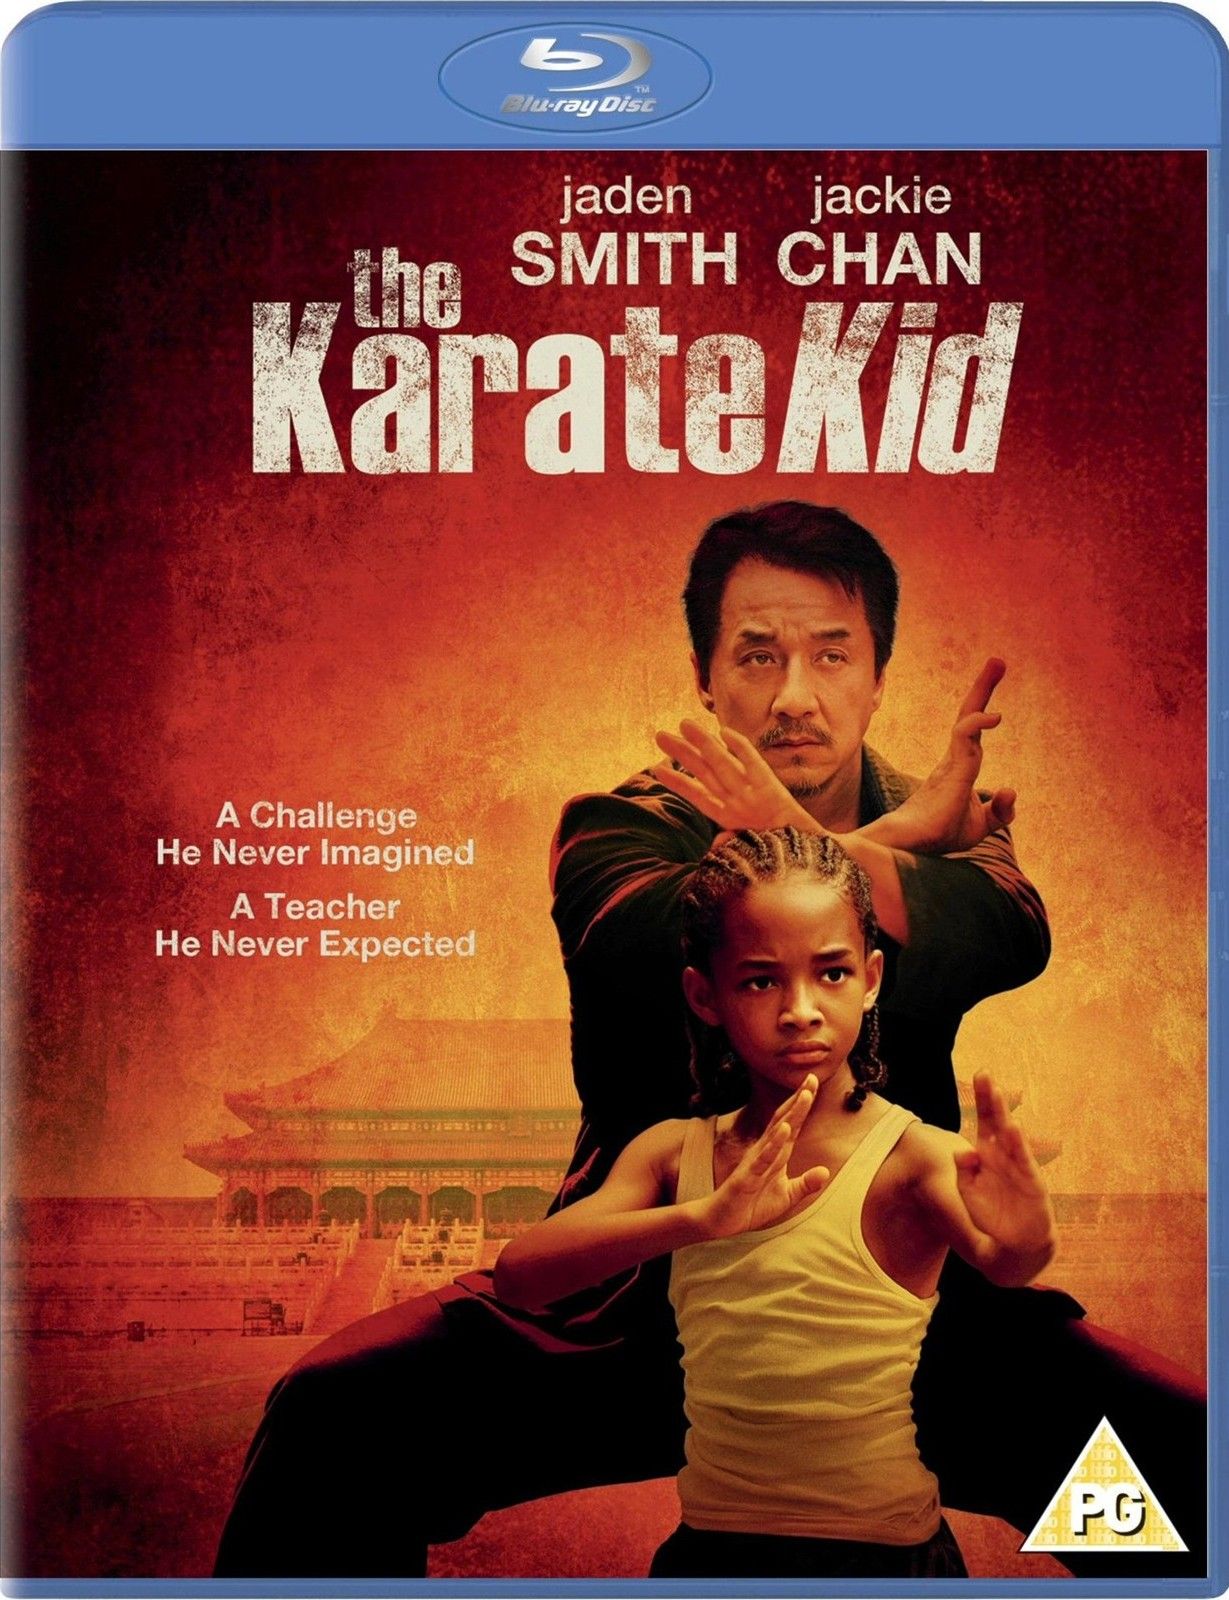 karate kid full movie in hindi dubbed download